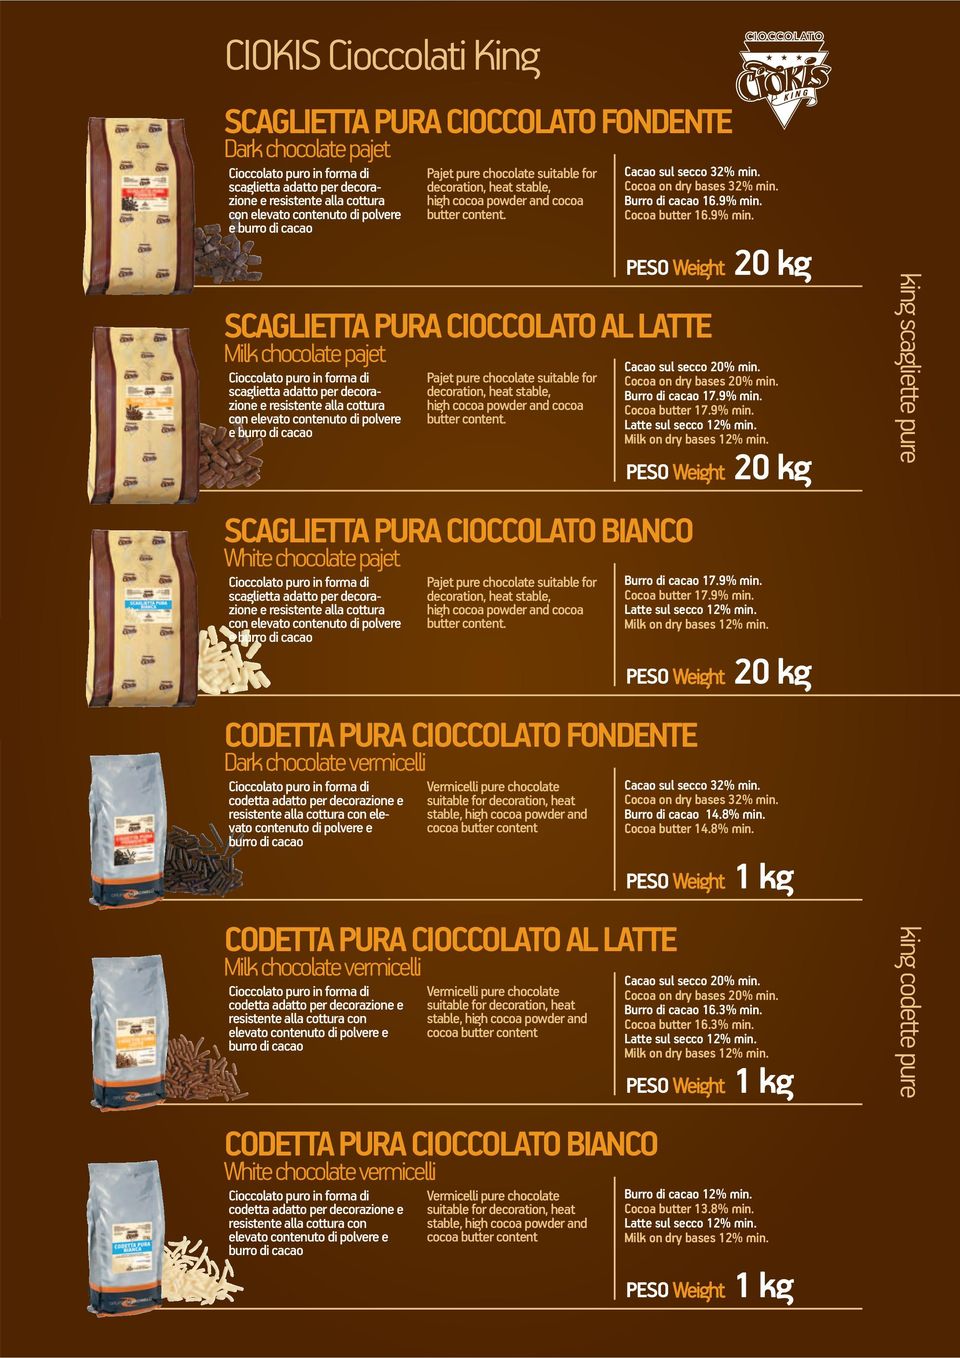 Cocoa butter 16.9% min.